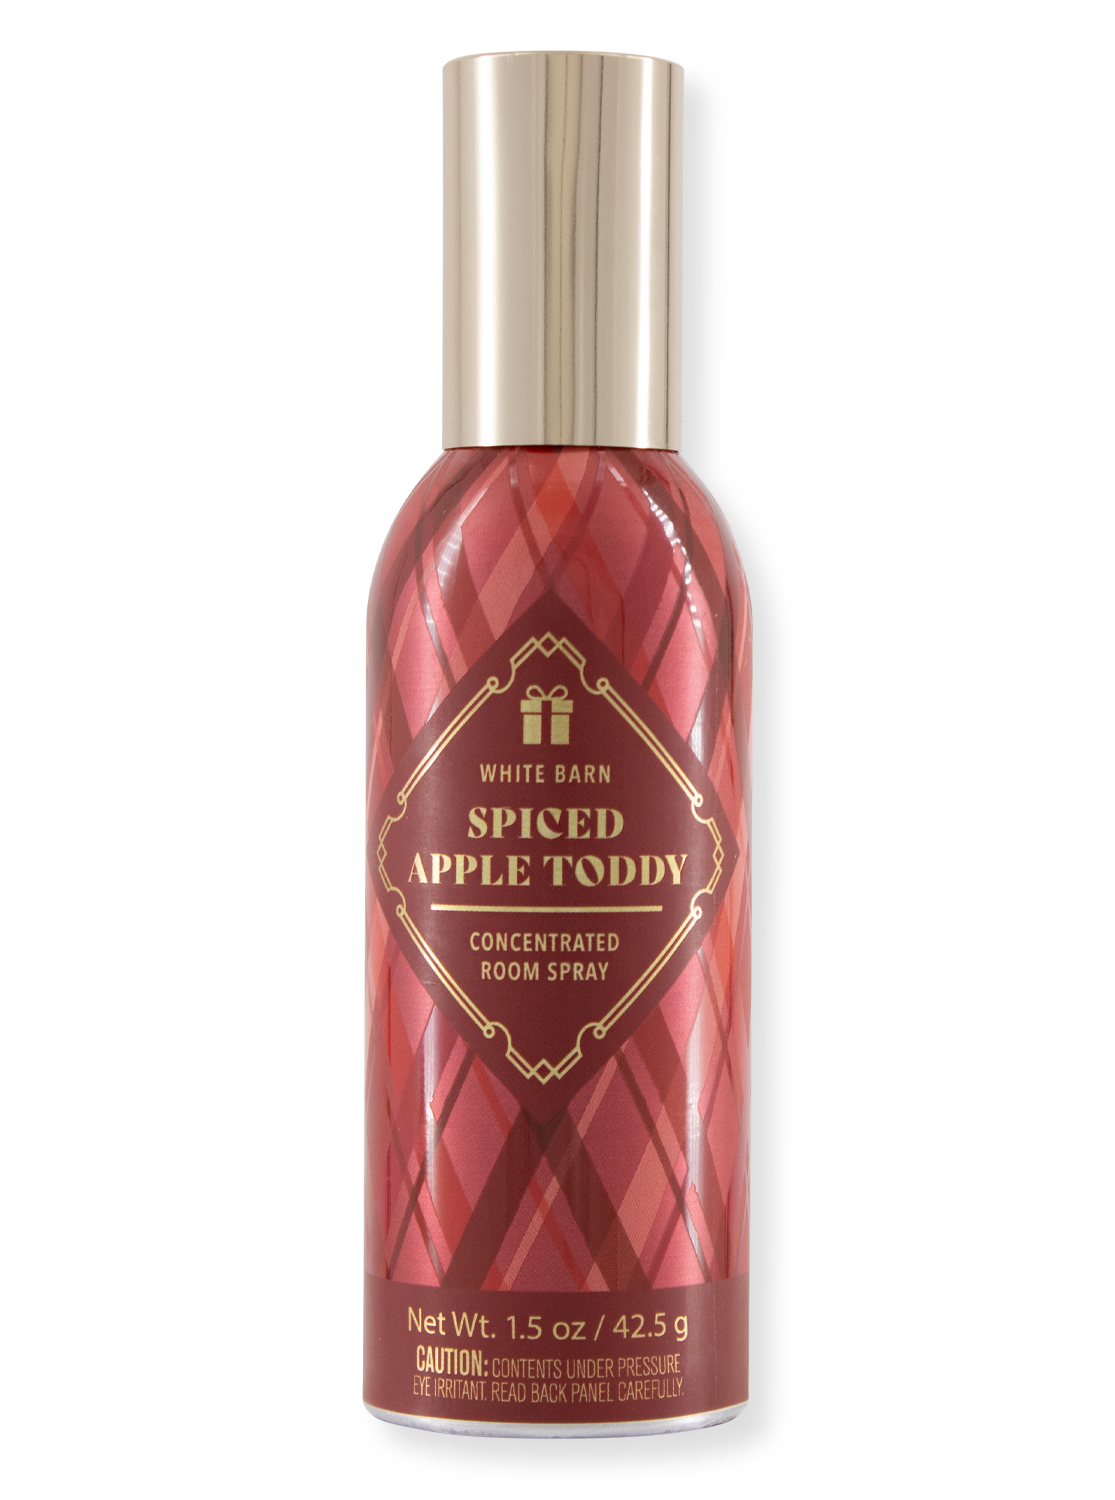 Room Spray - Spiced Apple Toddy - 42.5g